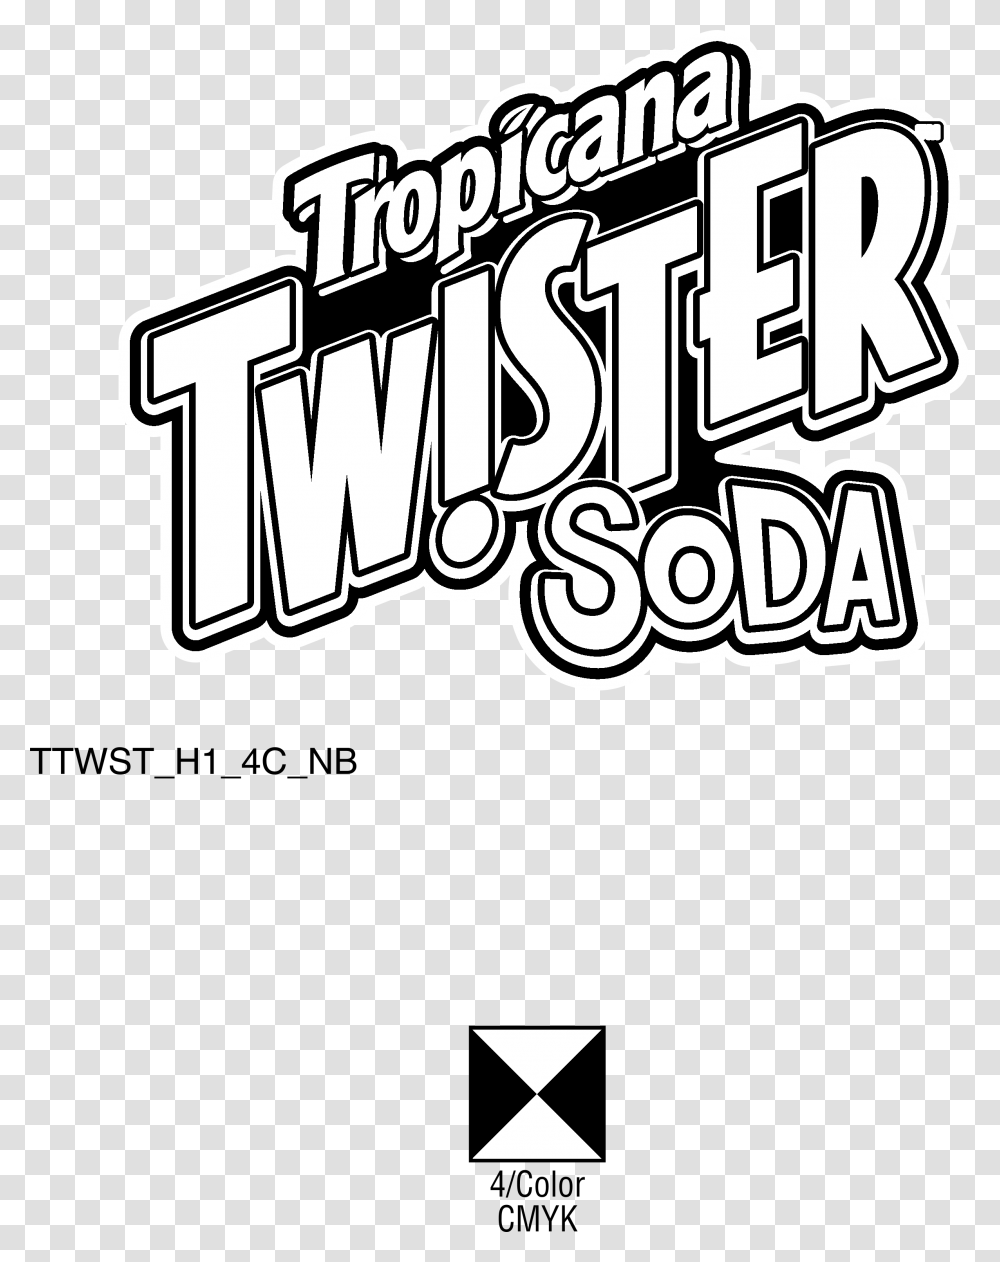 Tropicana Twister Soda Logo Black And White Tropicana Twister Soda, Word, Alphabet, Label Transparent Png